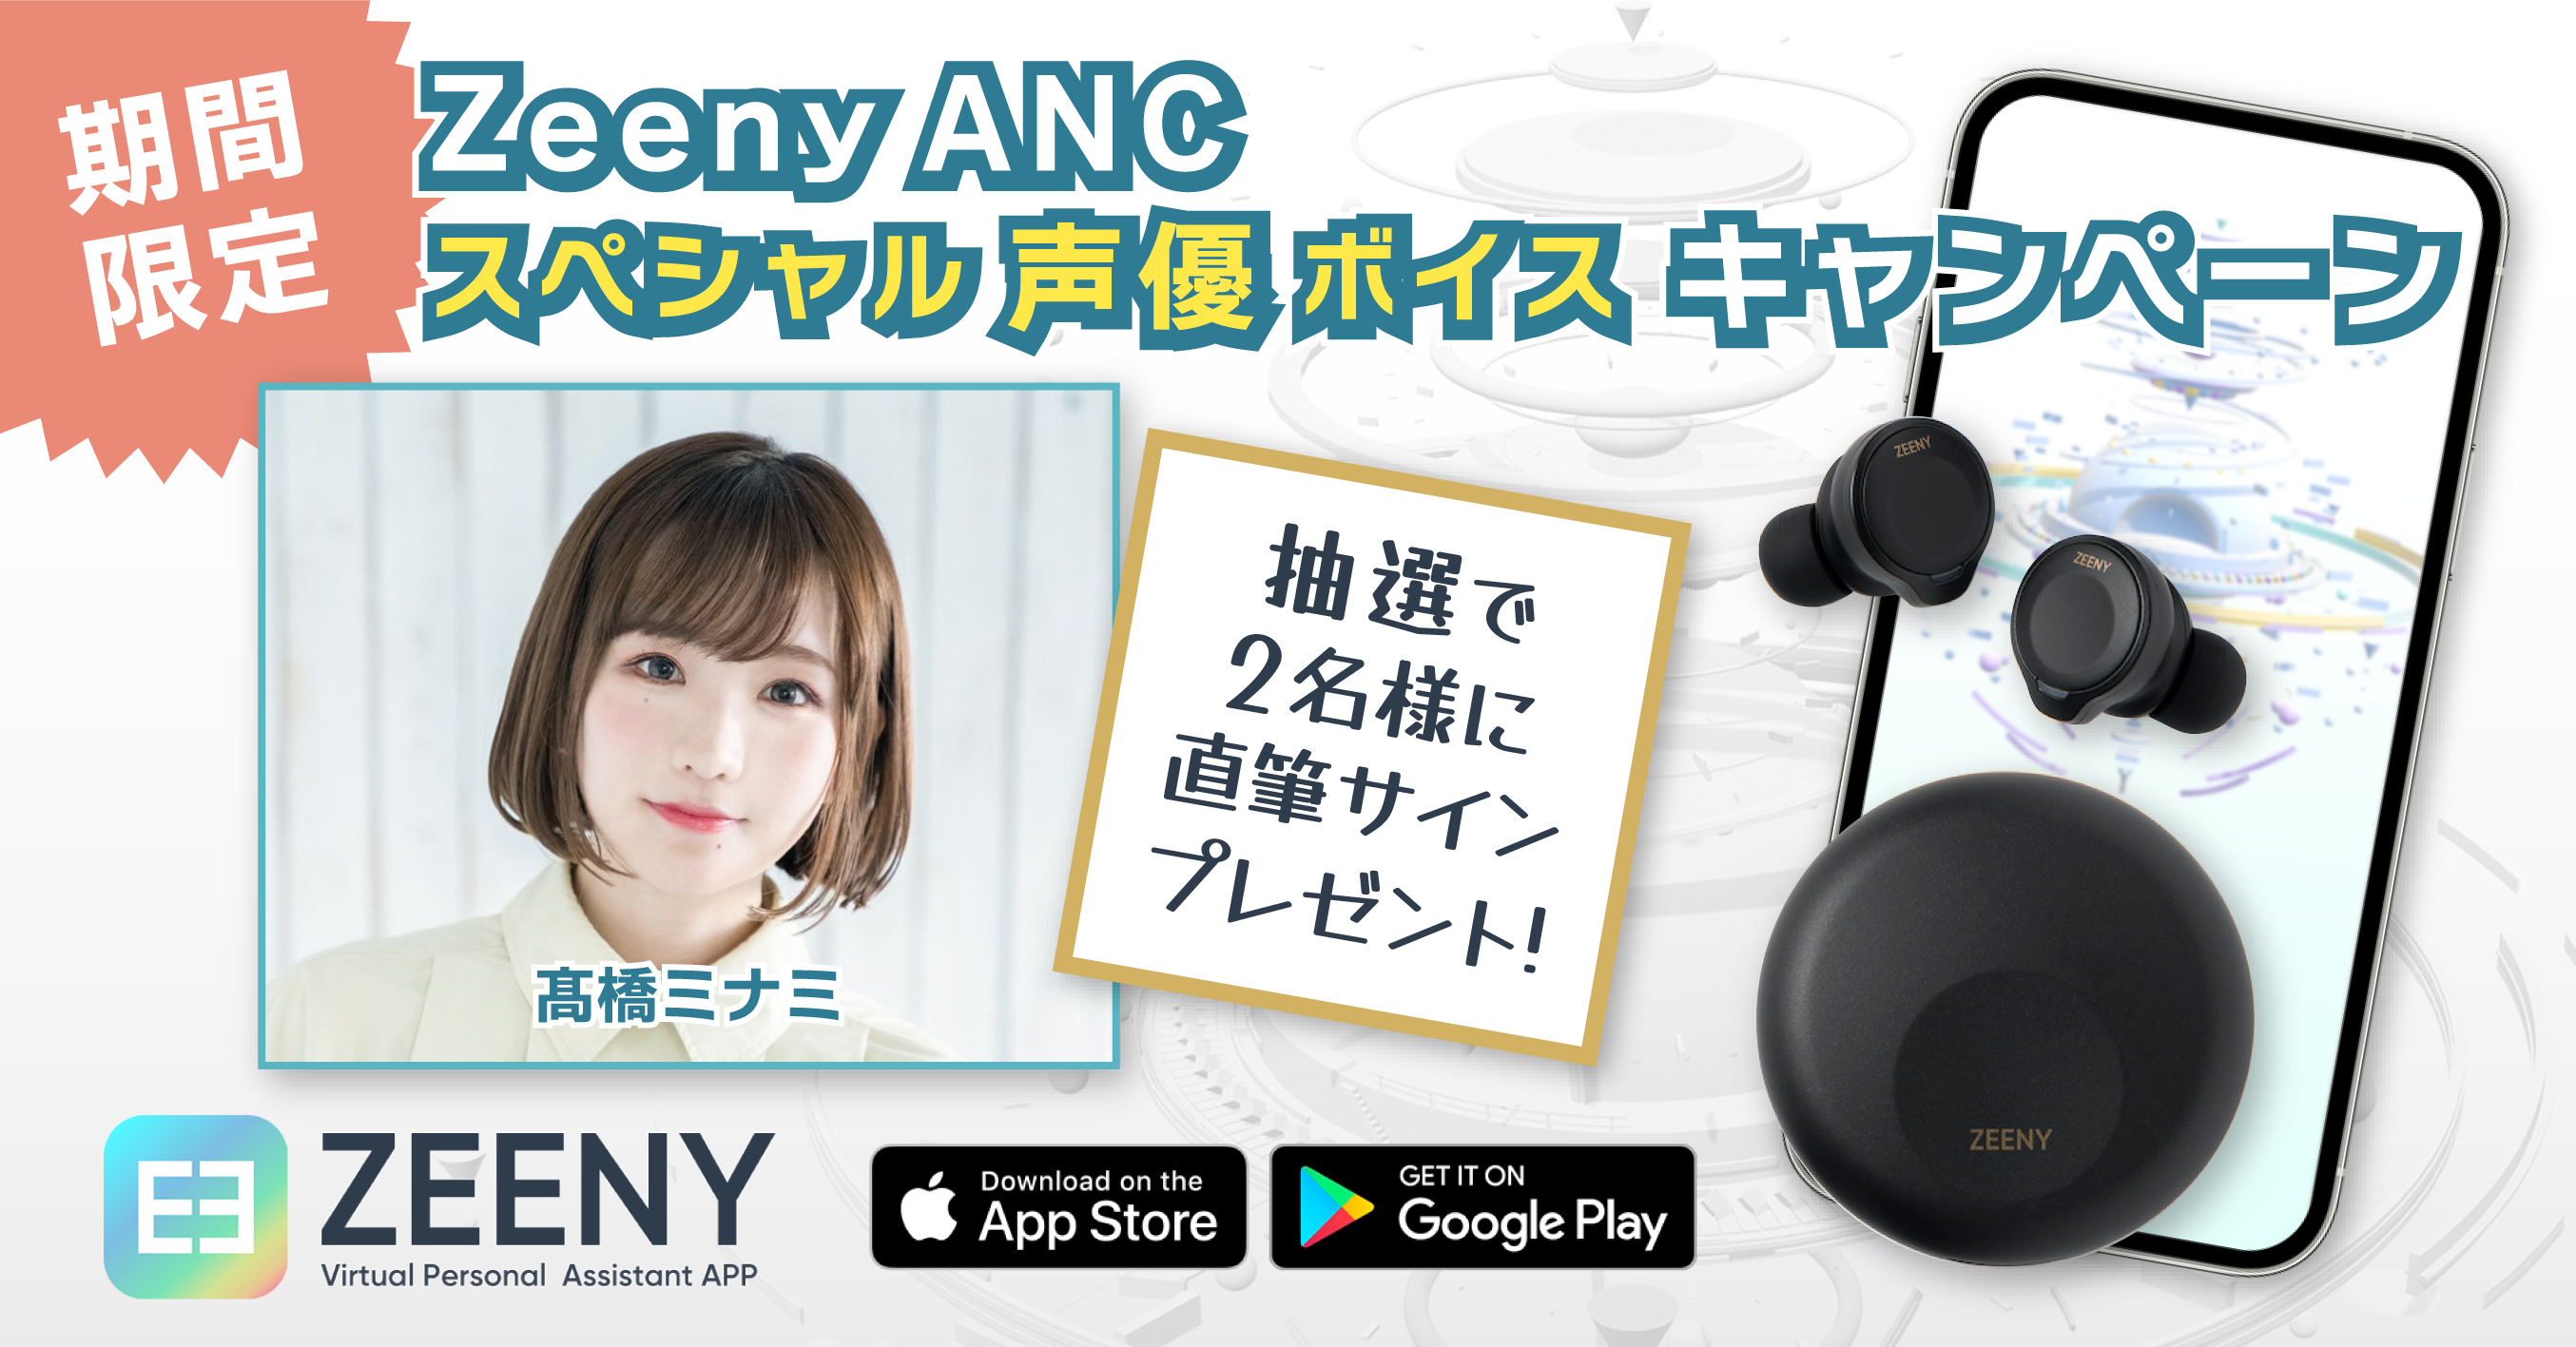 Zeeny Ancシステムボイスを 人気声優 髙橋ミナミ に無料で変更できる期間限定キャンペーンを開始 ネインのプレスリリース